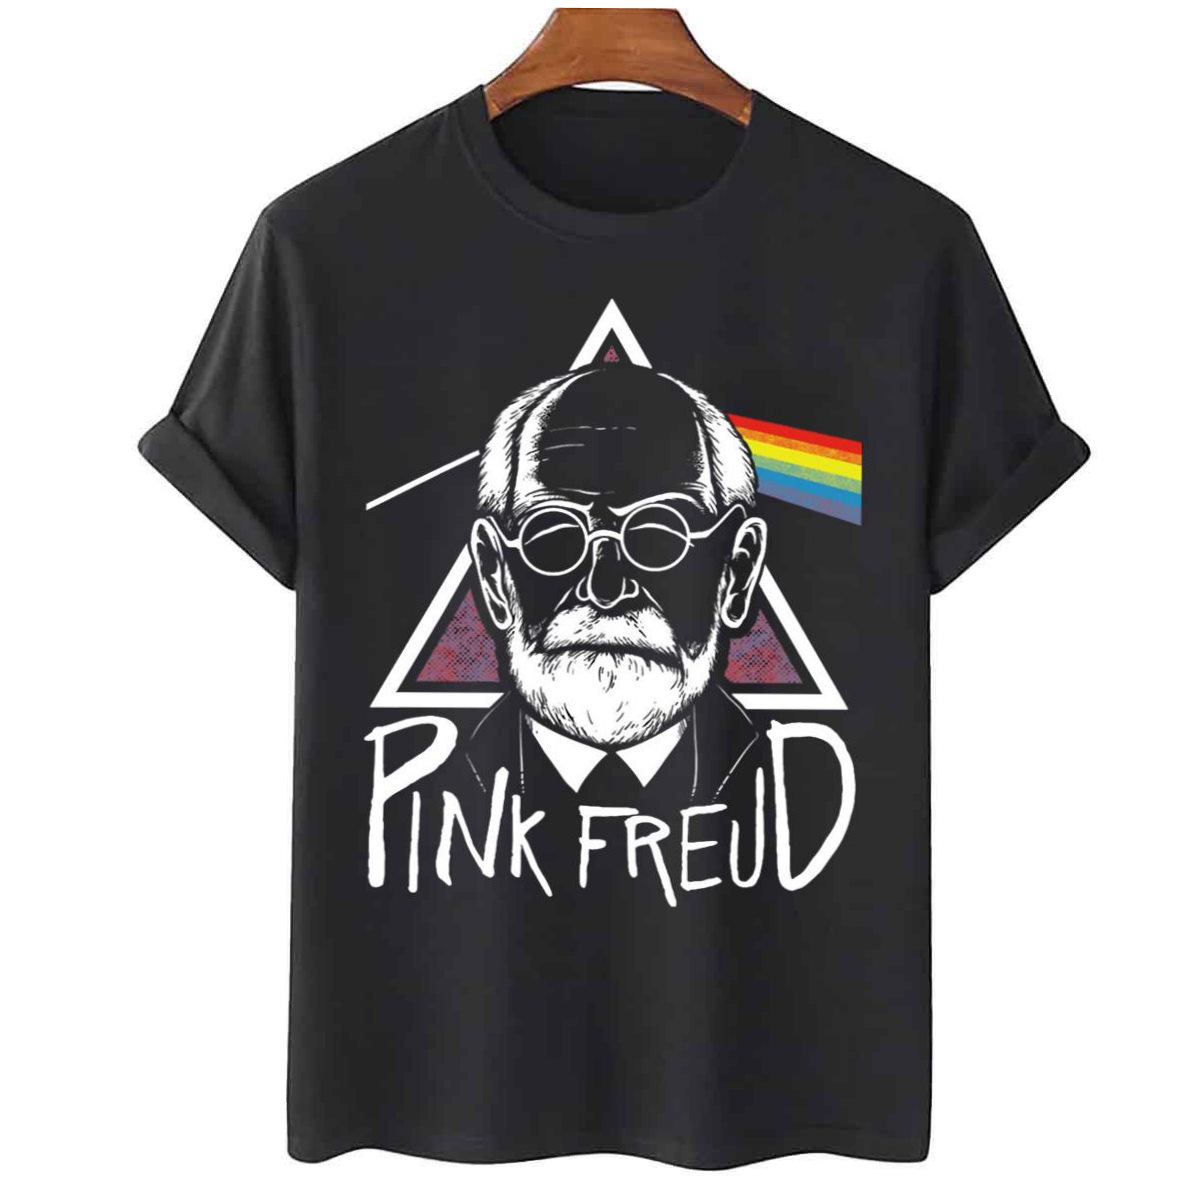 Pink Freud Sarcastic Funny Pink Freud Dark Side Unisex T Shirt 1